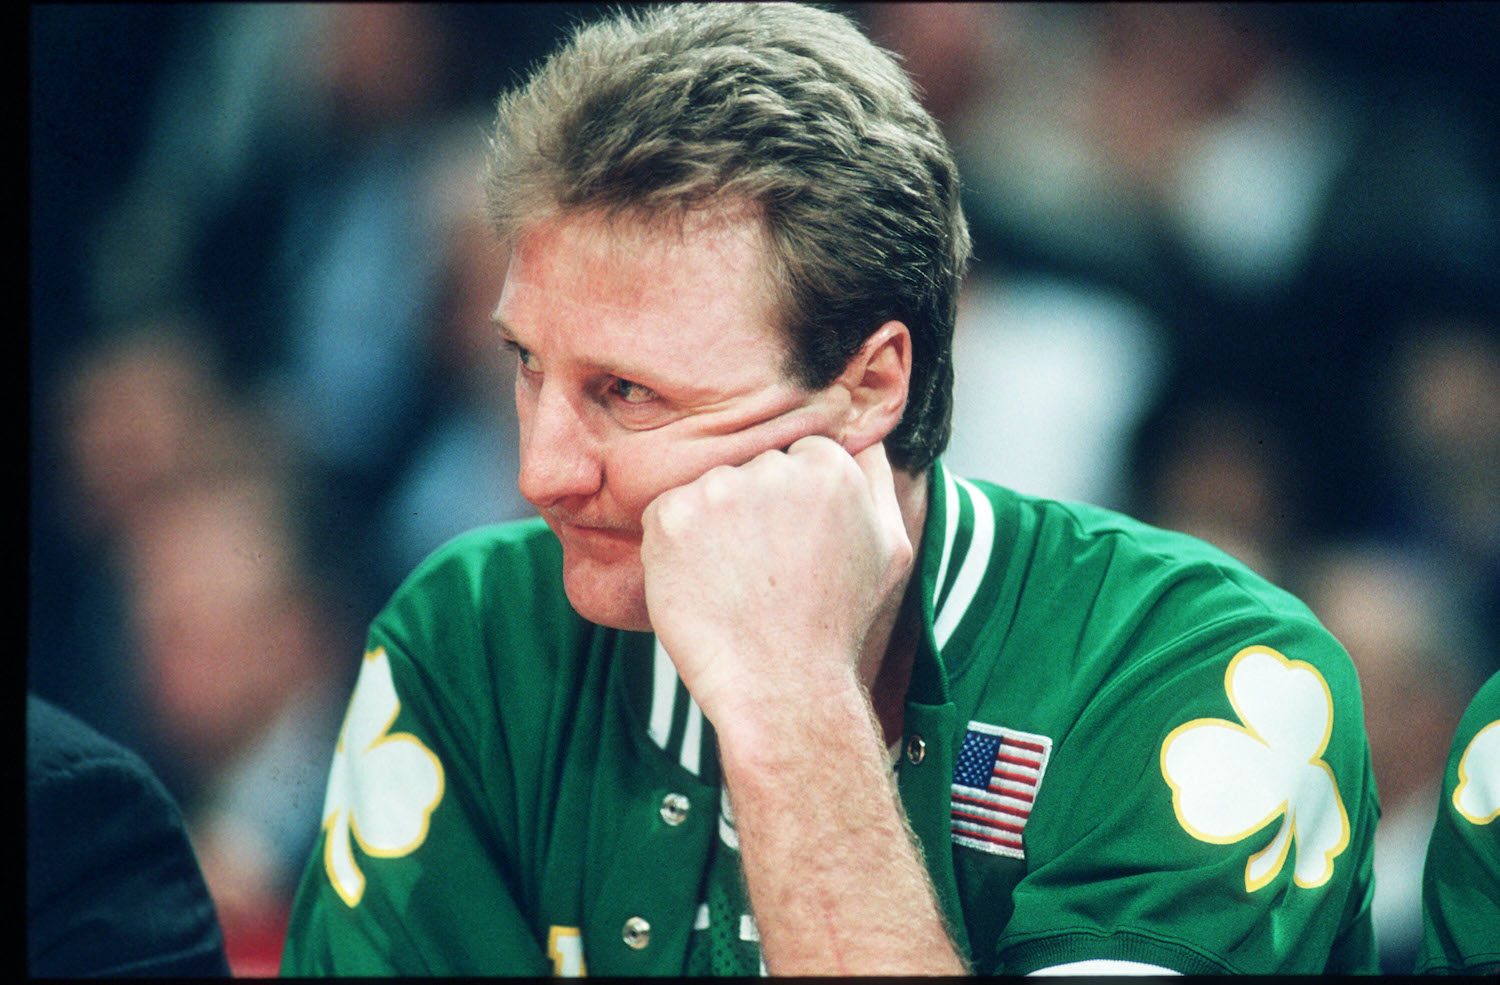 Boston Celtics star Larry Bird sits on the bench.